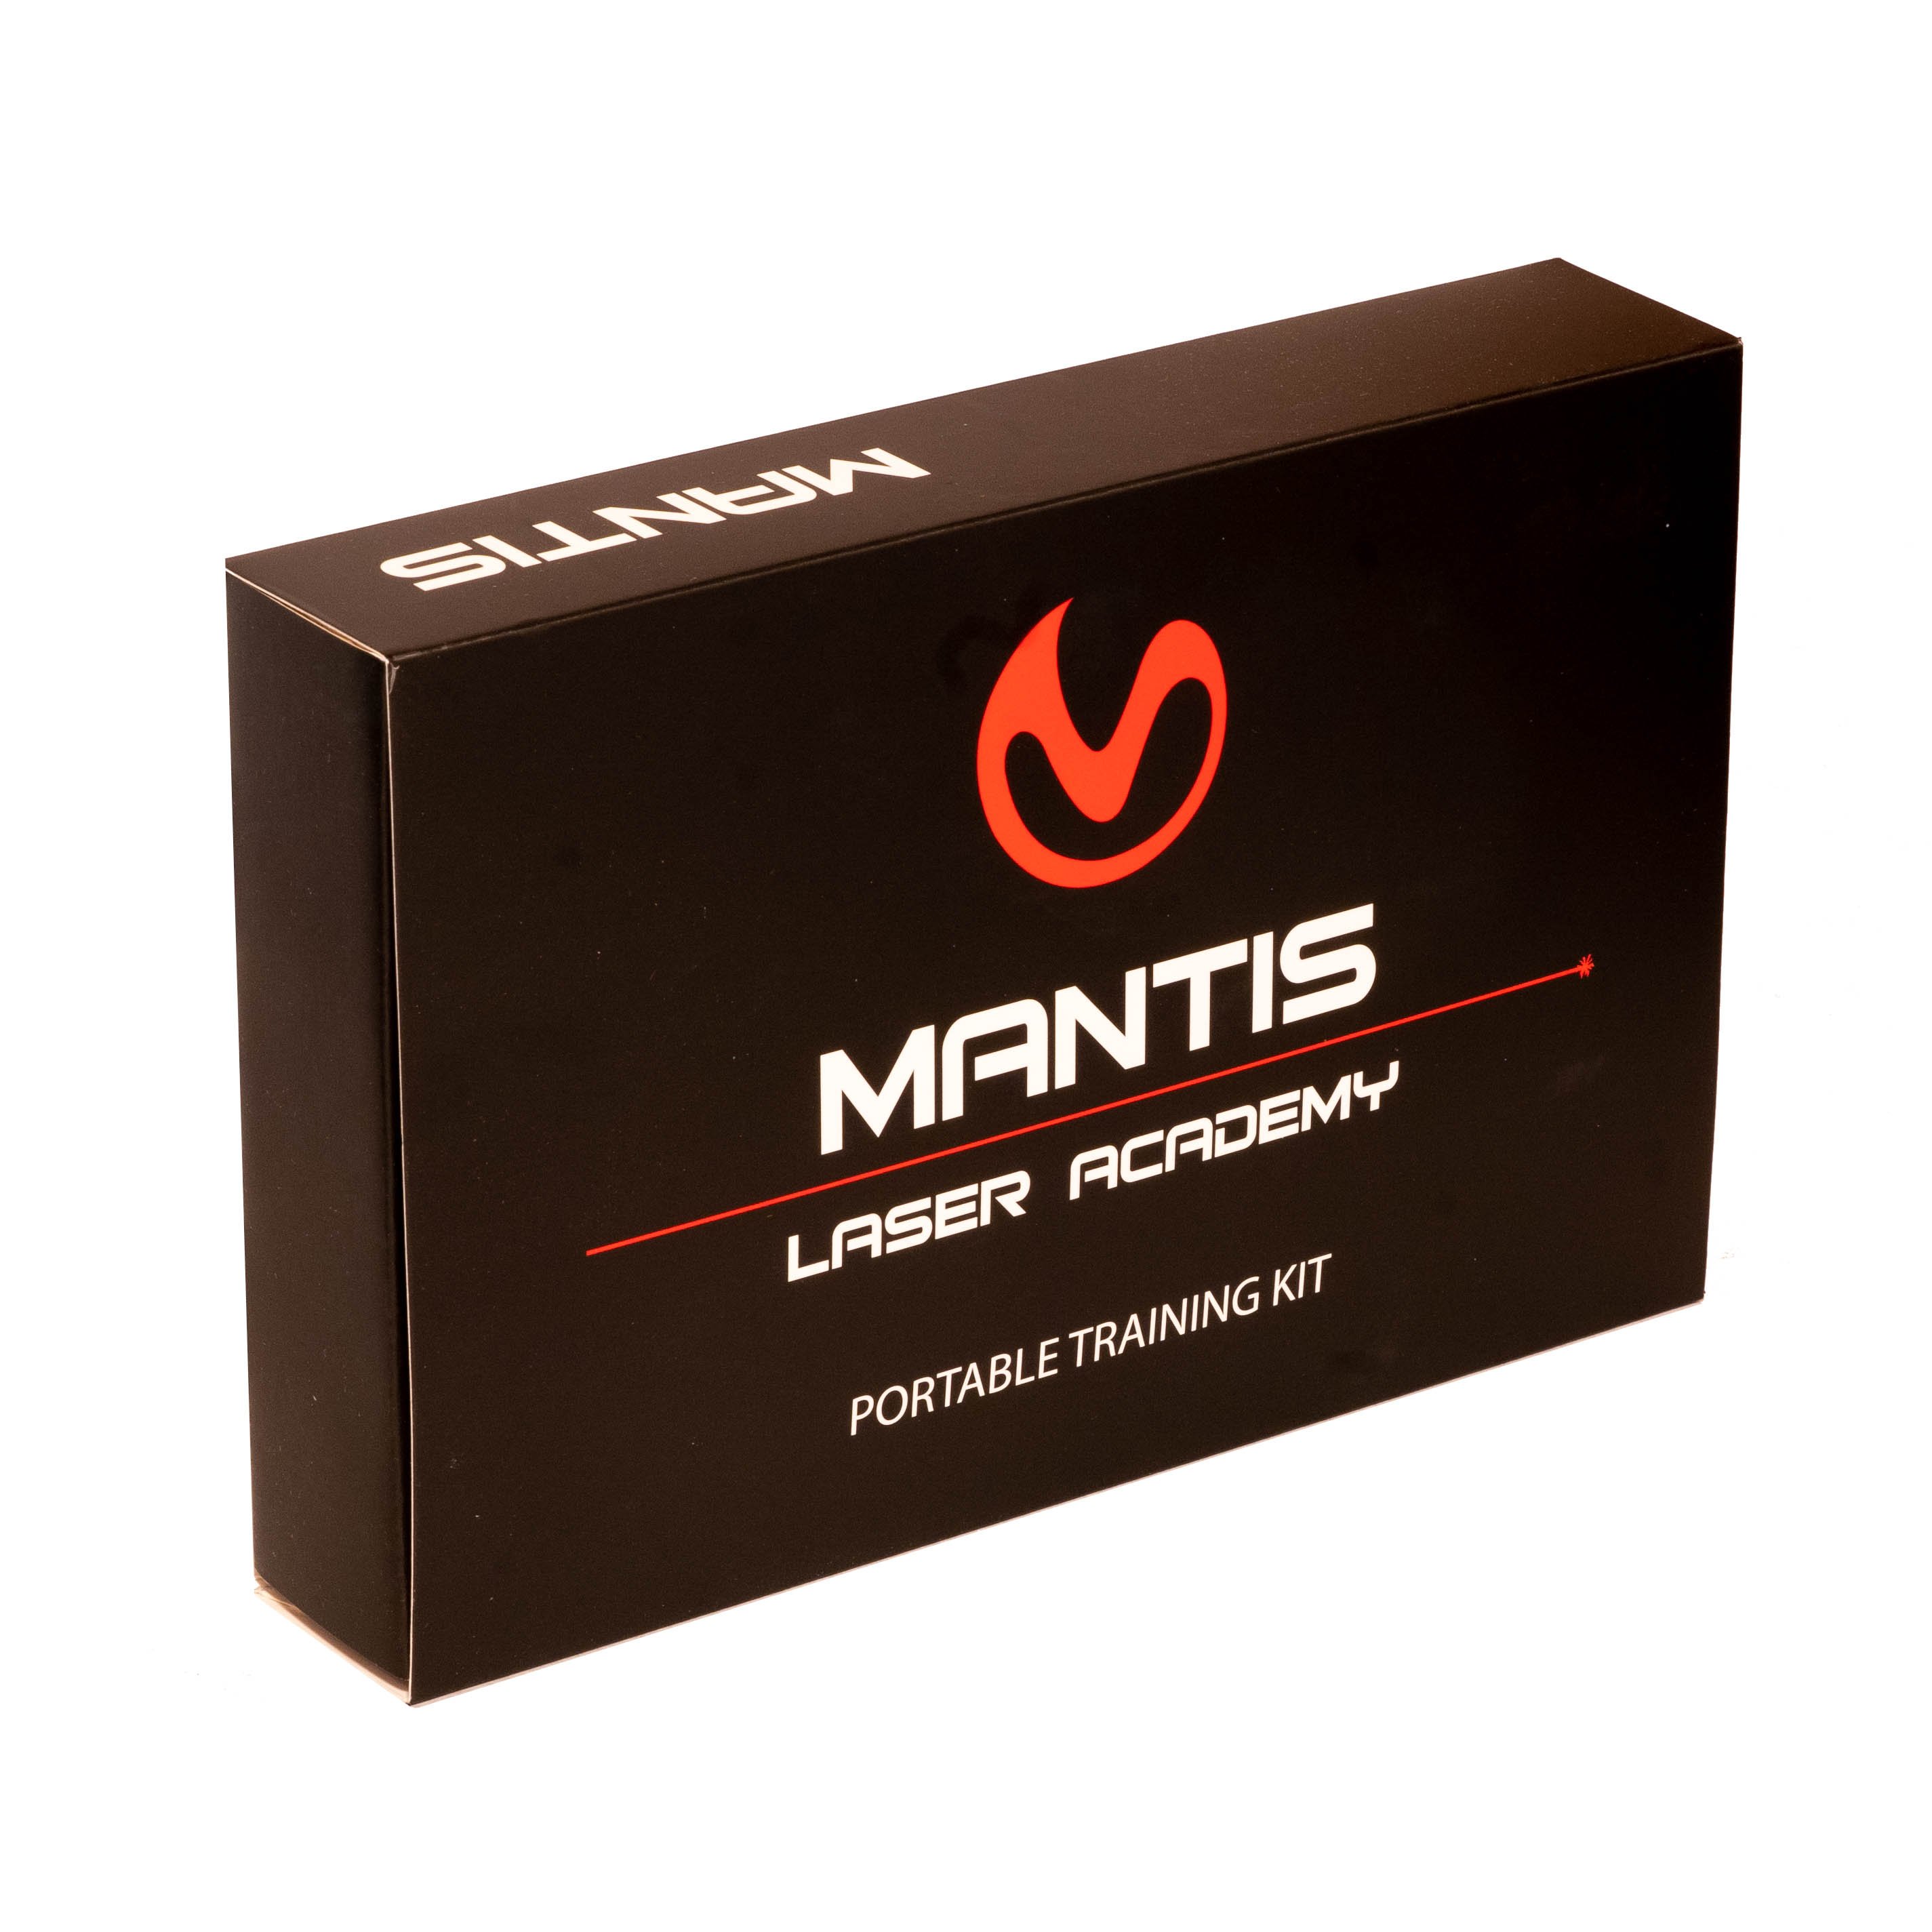 Mantis Portable Training Kit .45 Auto